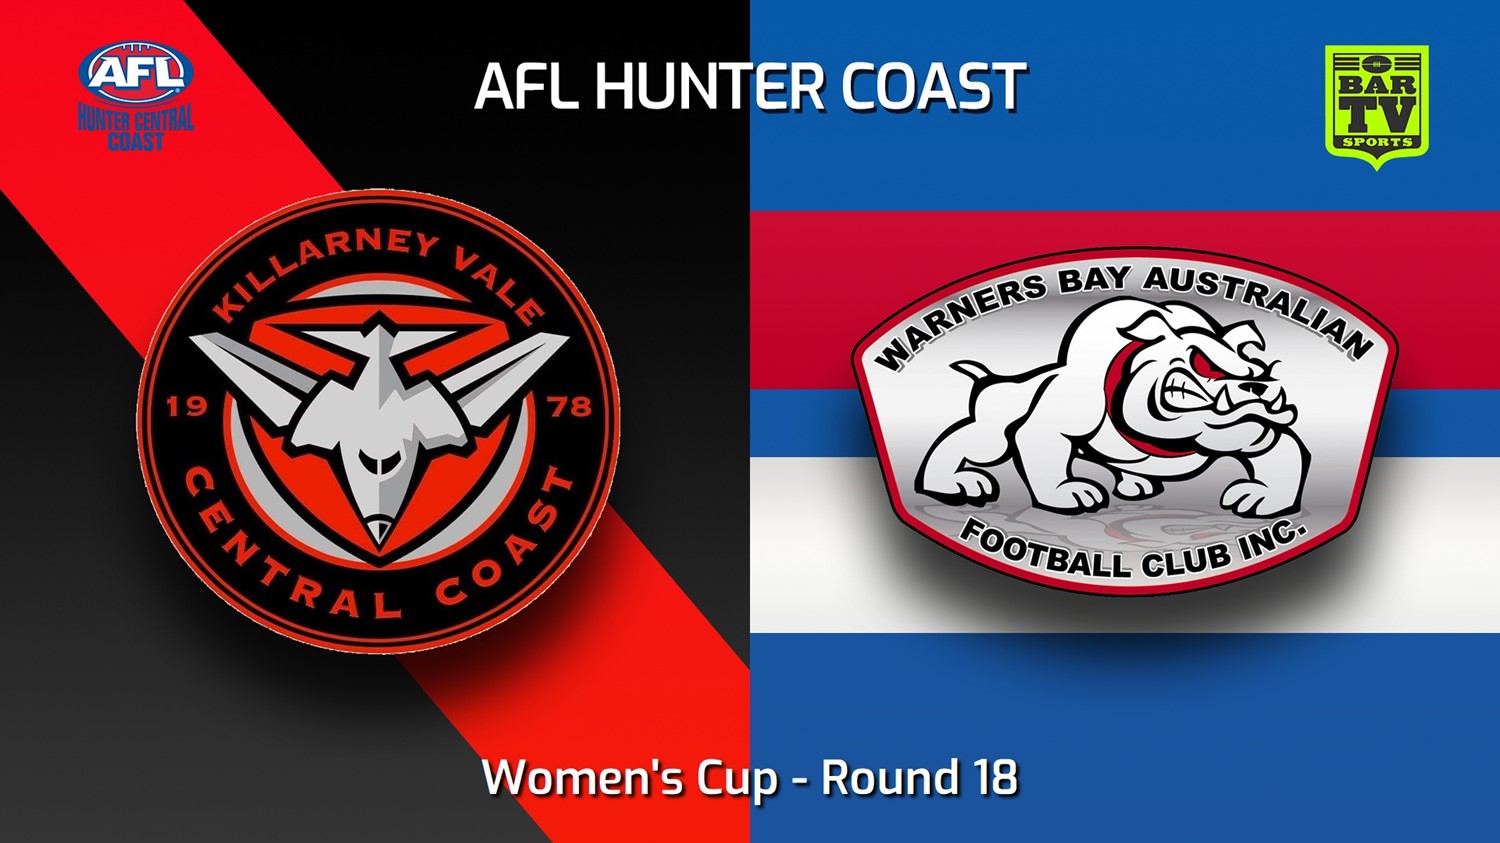 230819-AFL Hunter Central Coast Round 18 - Women's Cup - Killarney Vale Bombers v Warners Bay Bulldogs Minigame Slate Image